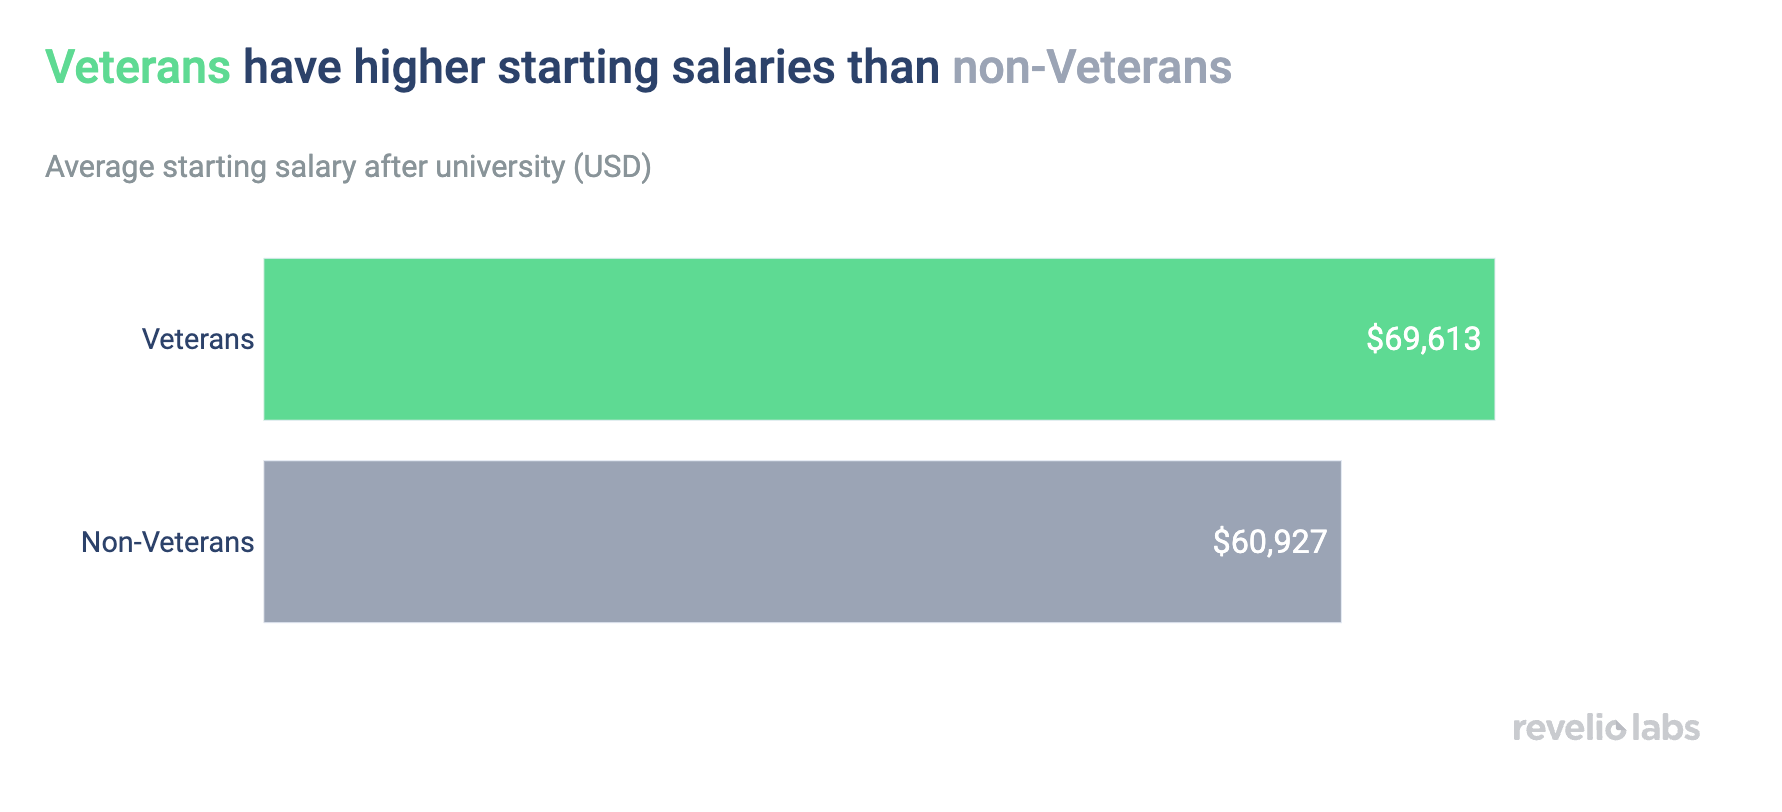 Veterans have higher starting salaries than non-veterans